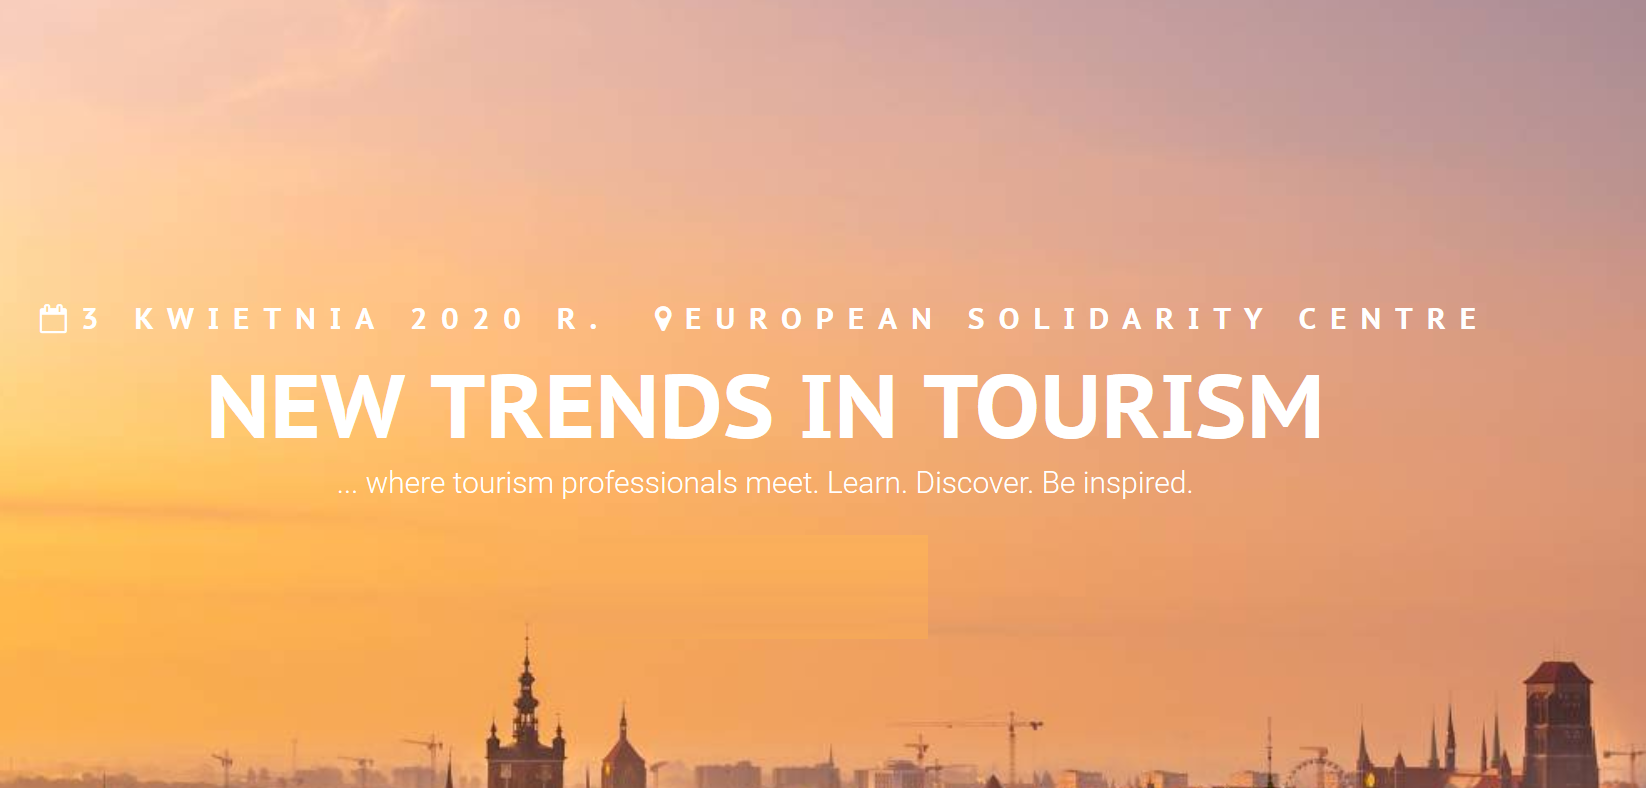 3.04.2020 Konferencja New Trends in Tourism 2020 Gdańsk 